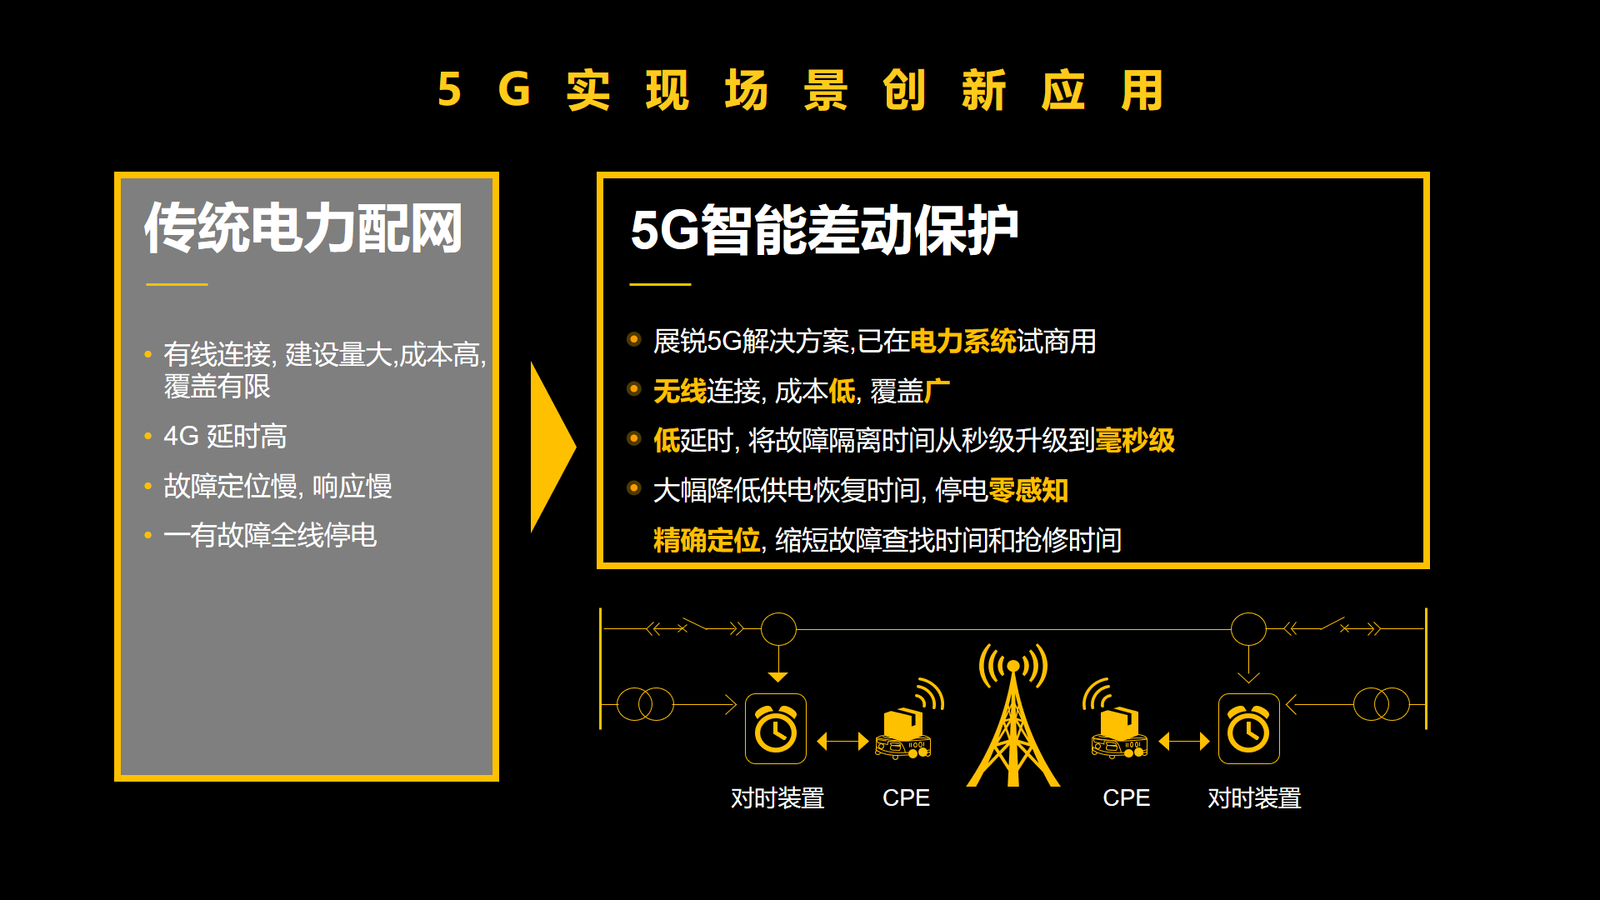 5G 无线网络如何实现手机飞行？深度解析 技术的魅力与突破  第3张